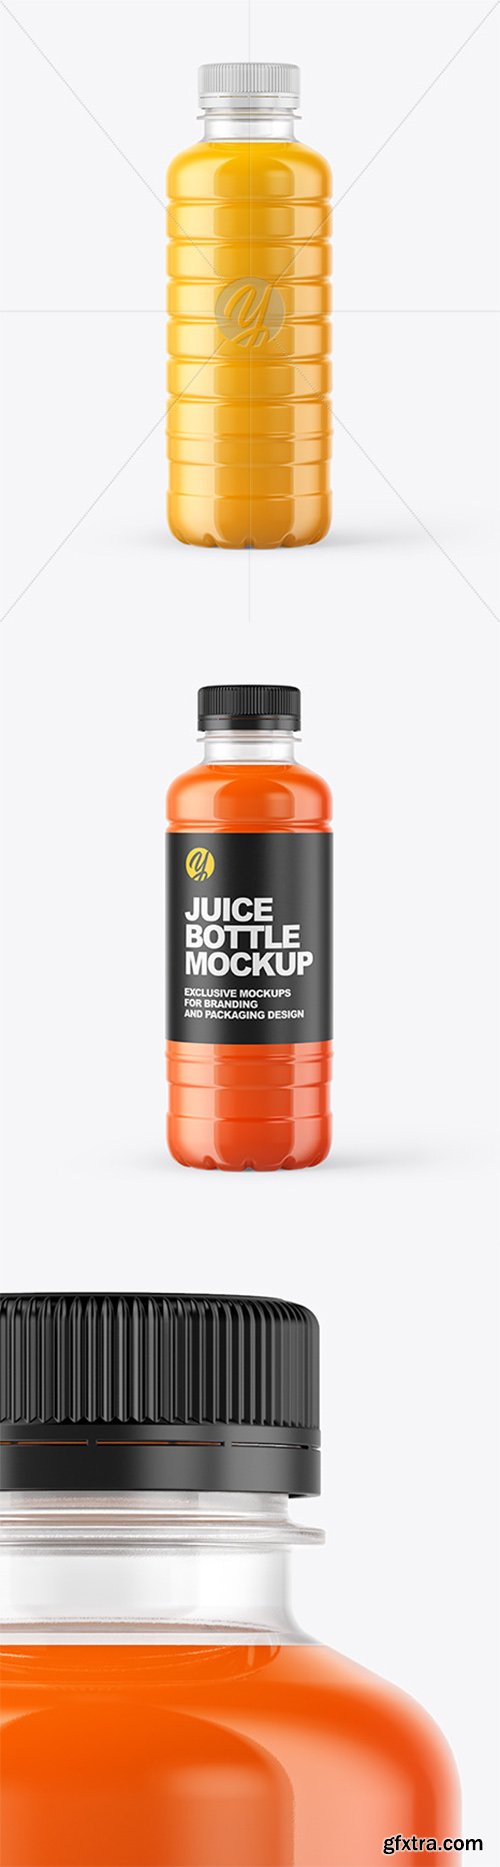 Clear PET Bottle with Juice Mockup 52054